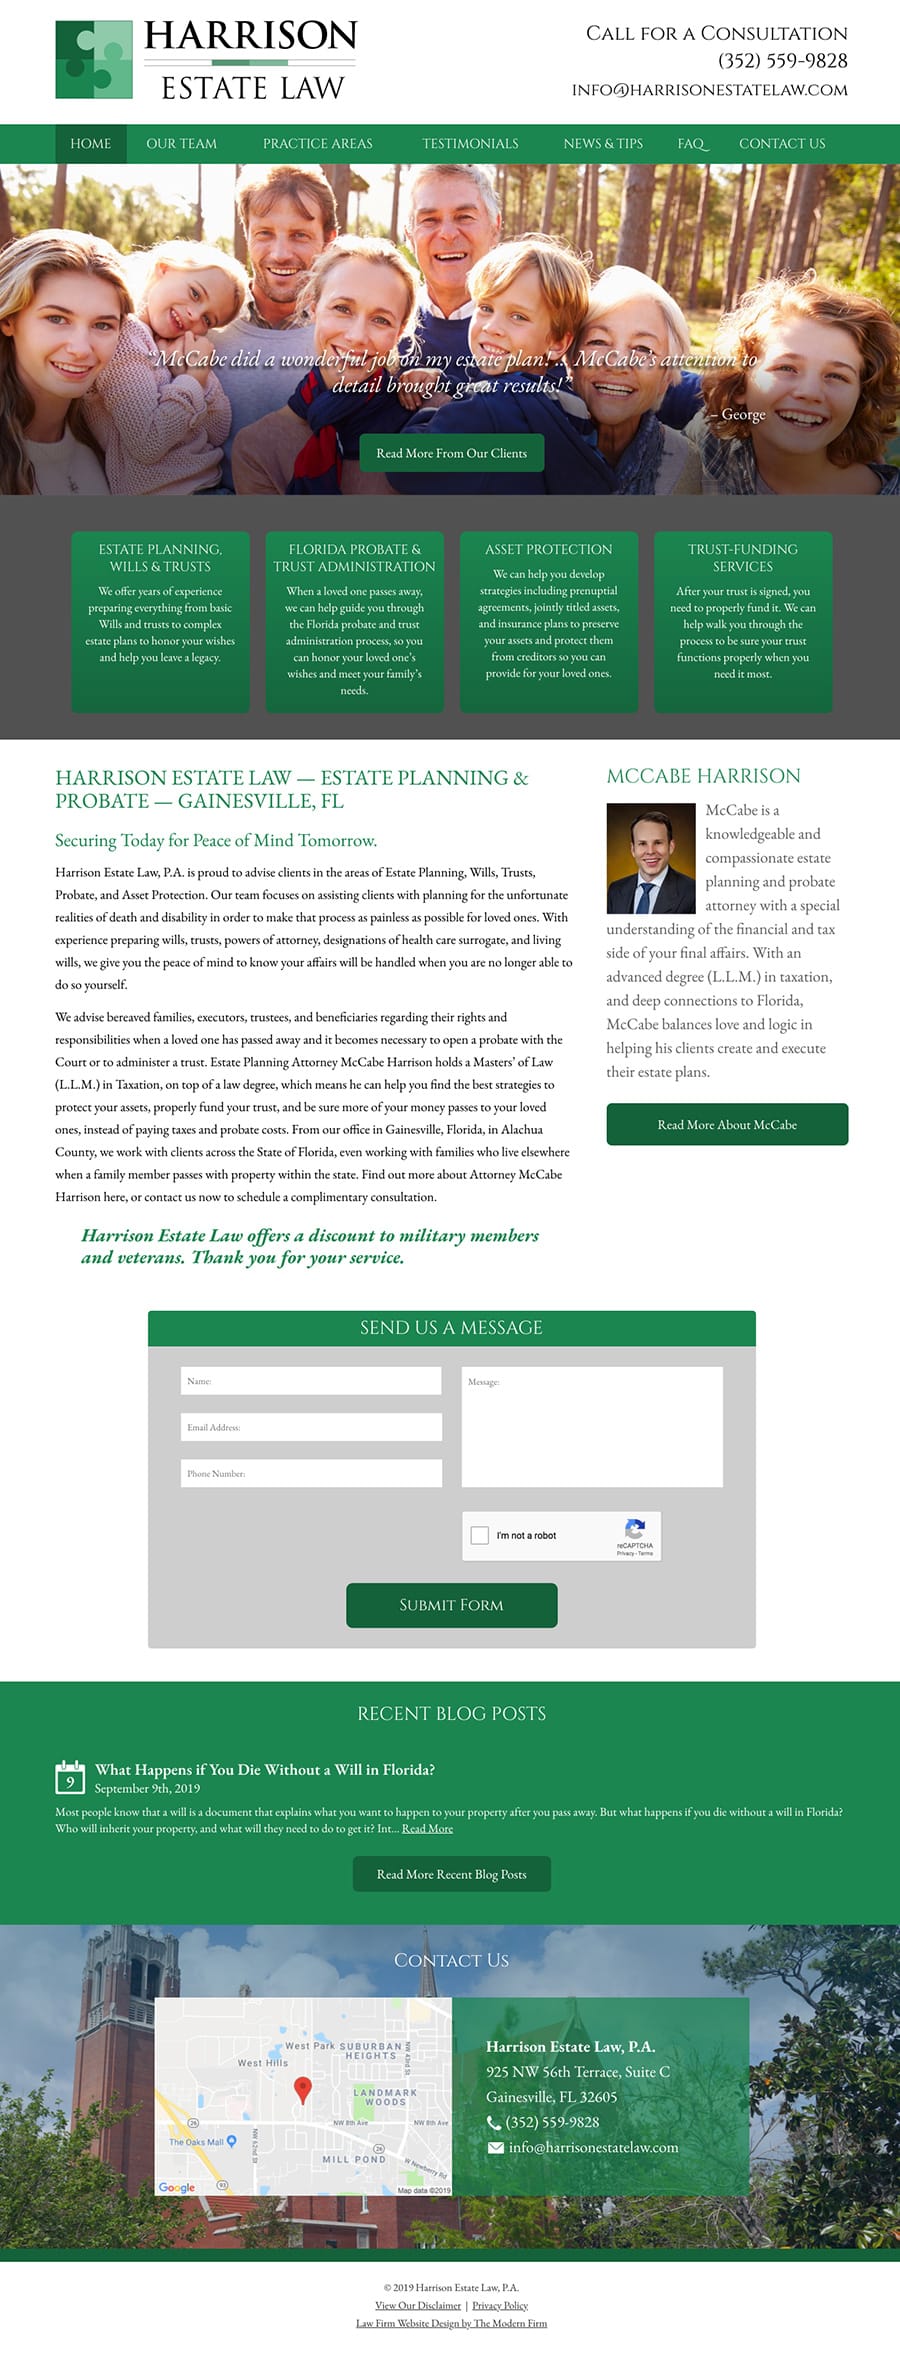 Law Firm Website Design for Harrison Estate Law, P.A.